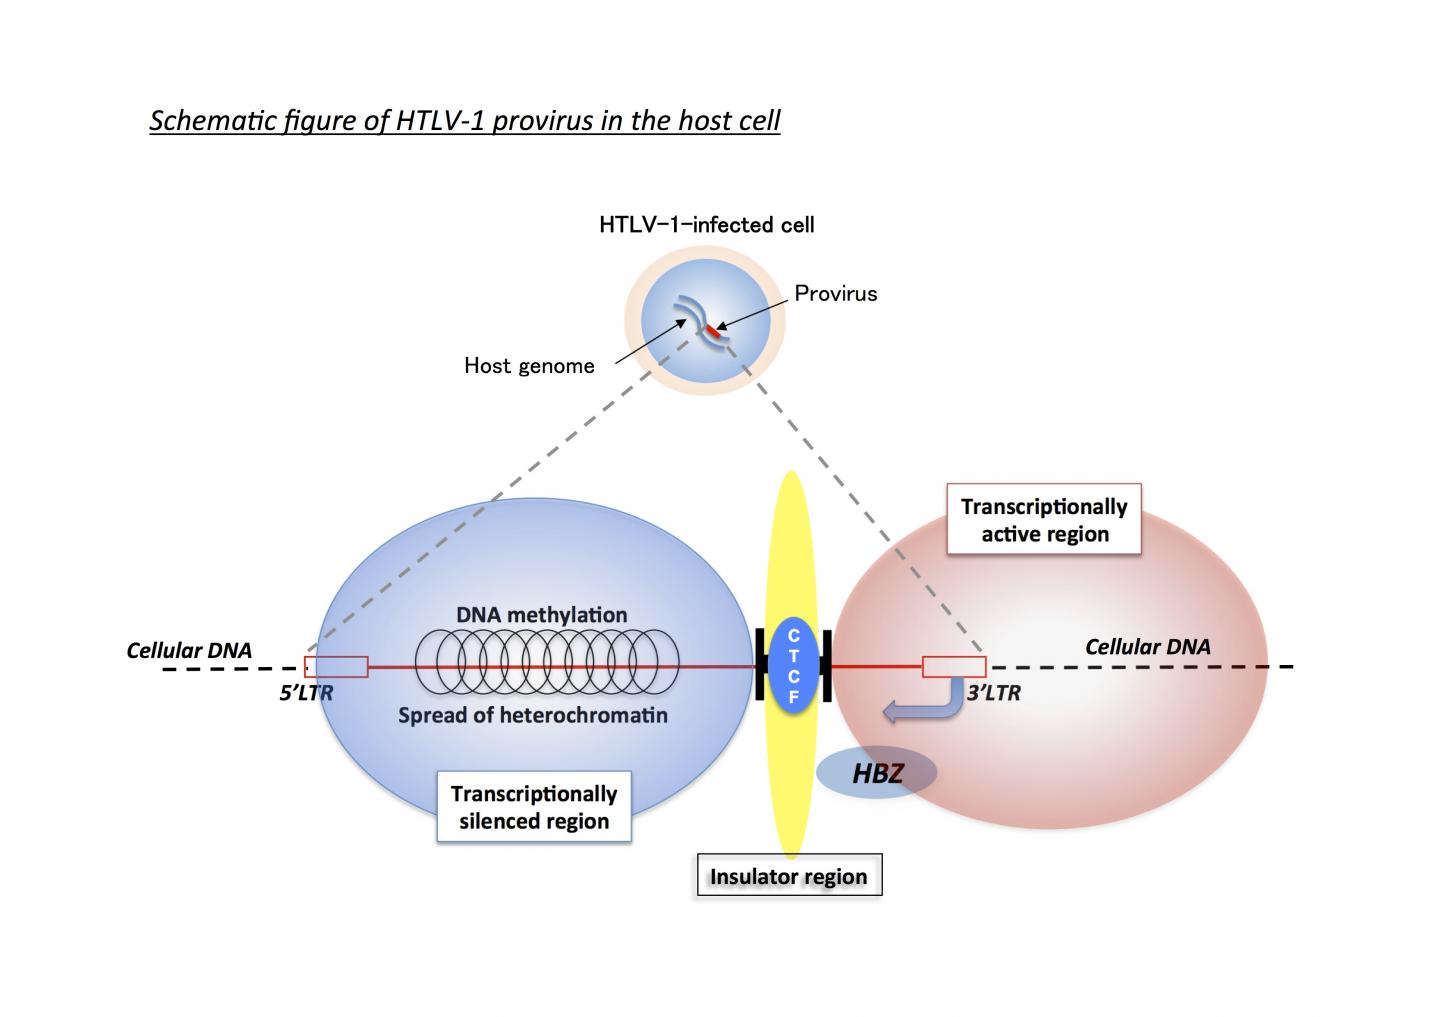 HTLV-1 Provirus in the Host Cell